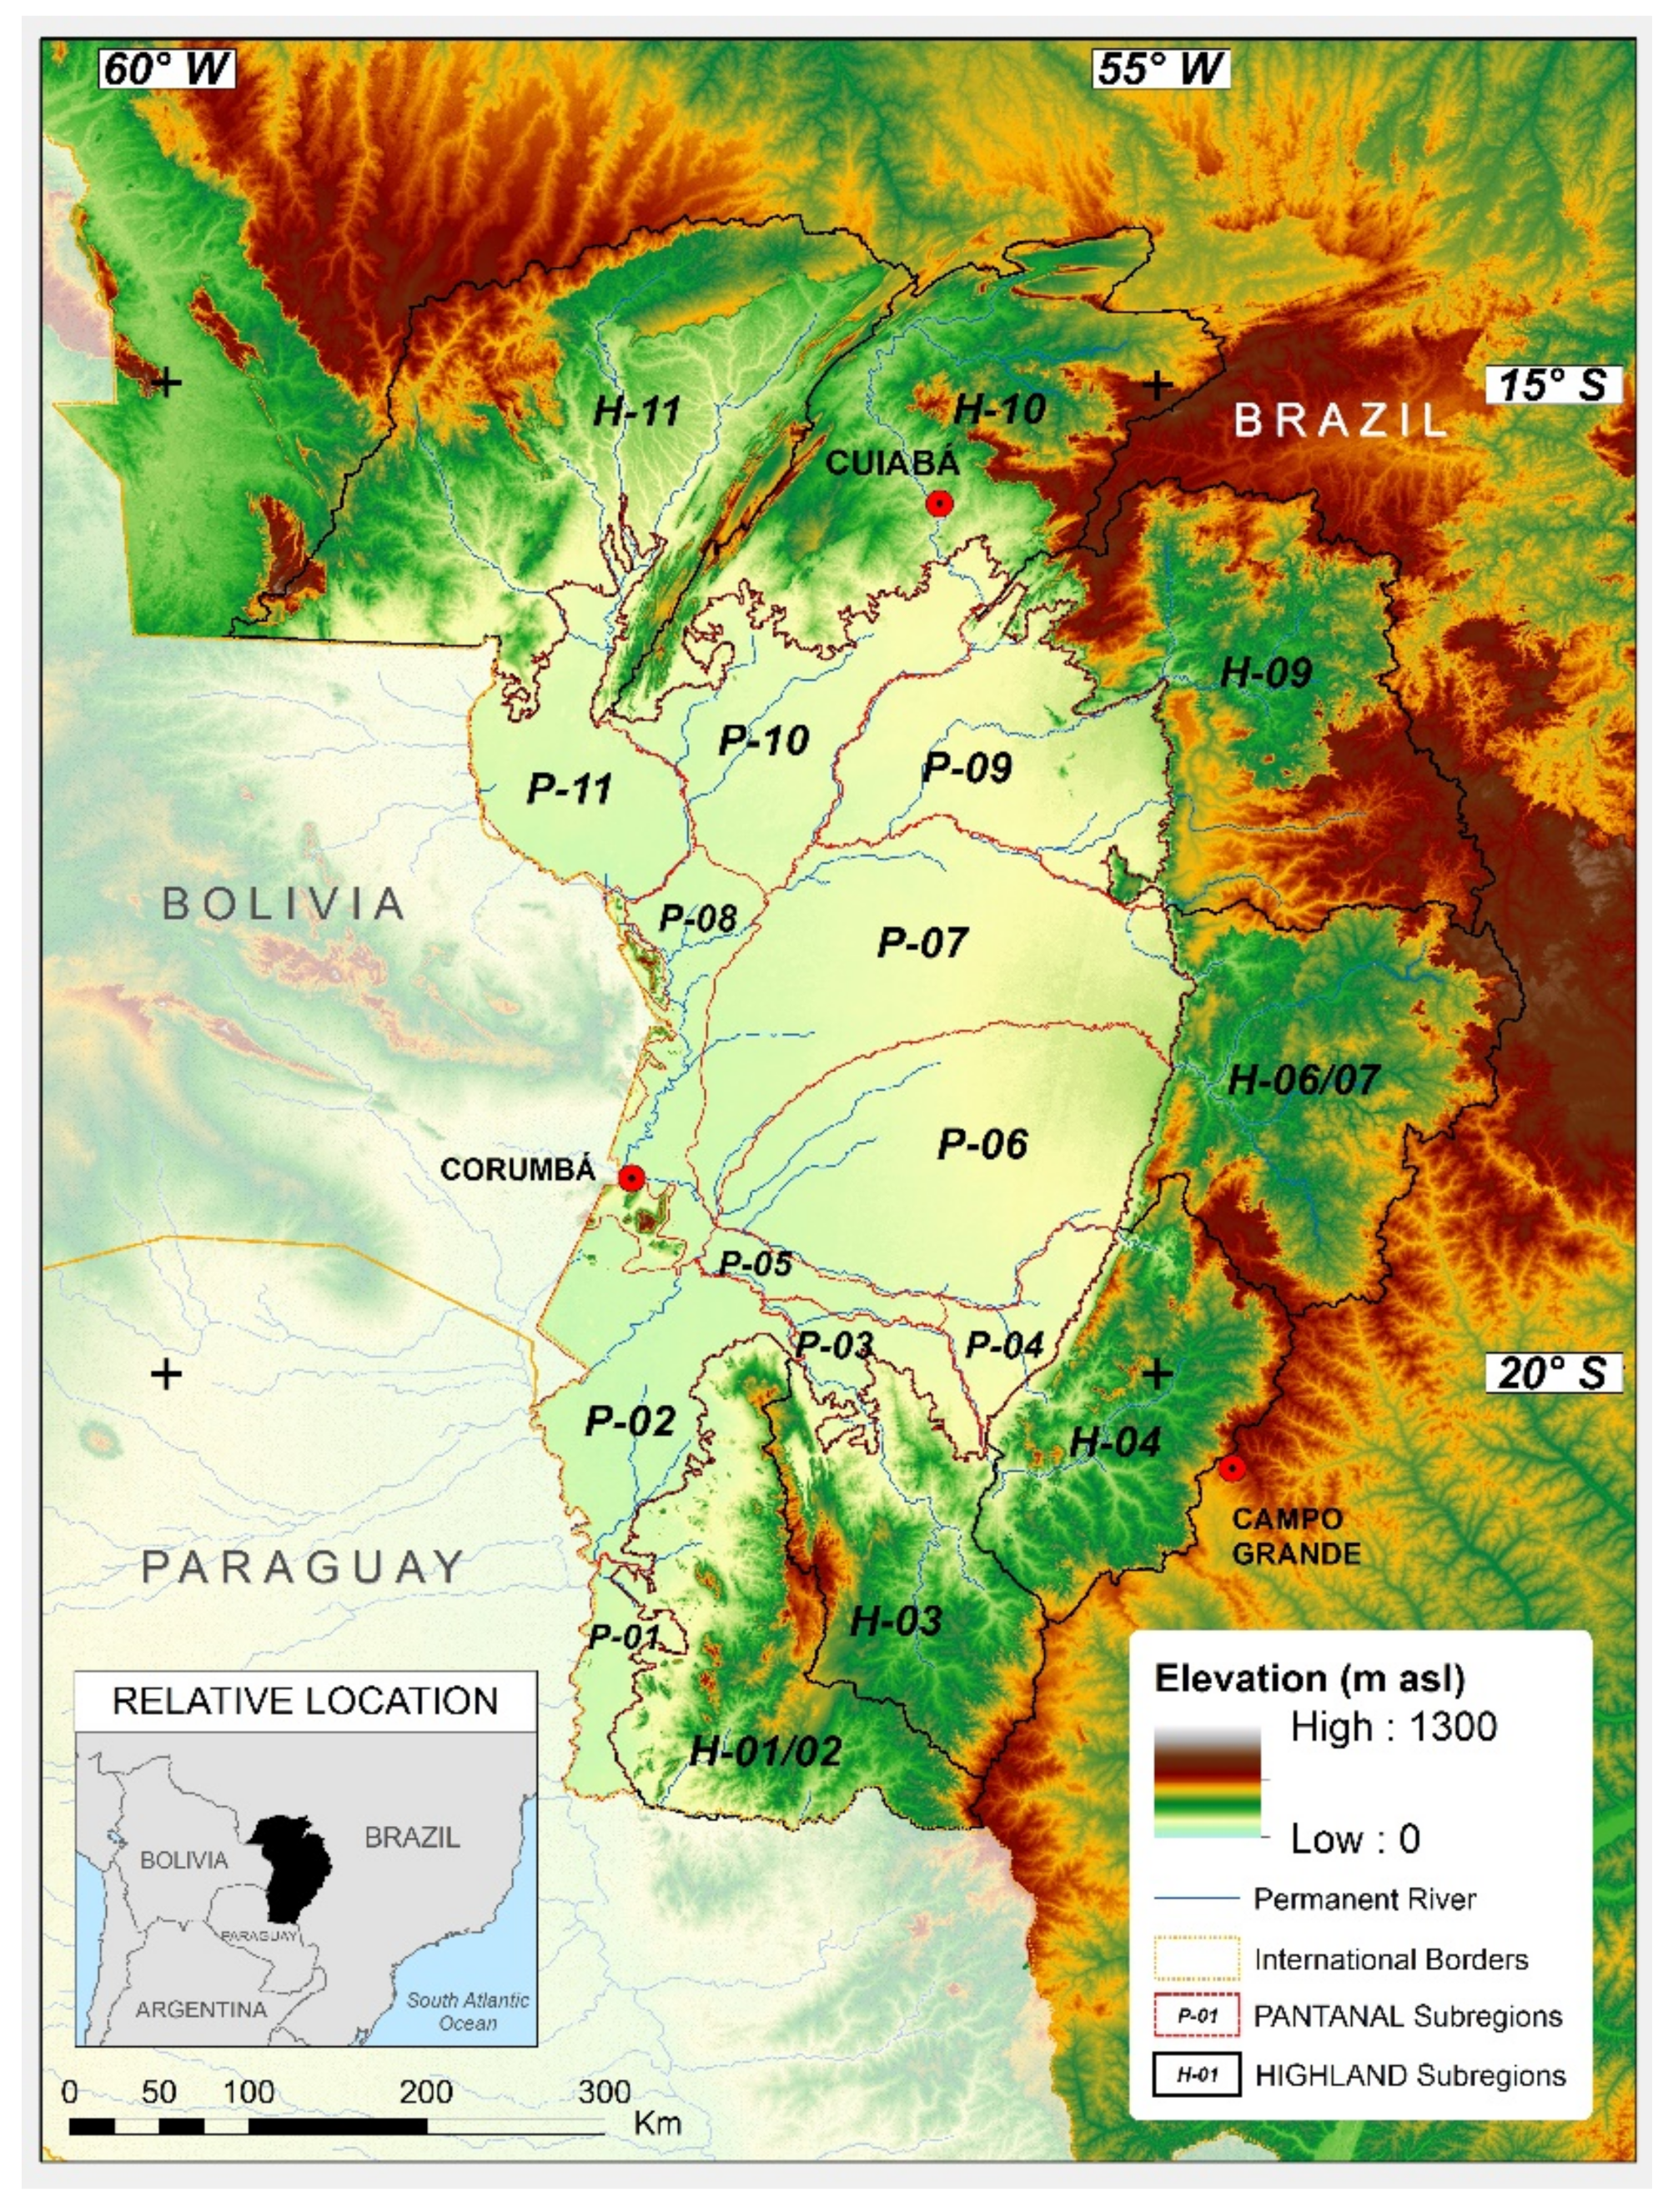 PDF) Ciencia Pantanal vol 5 Portuguese